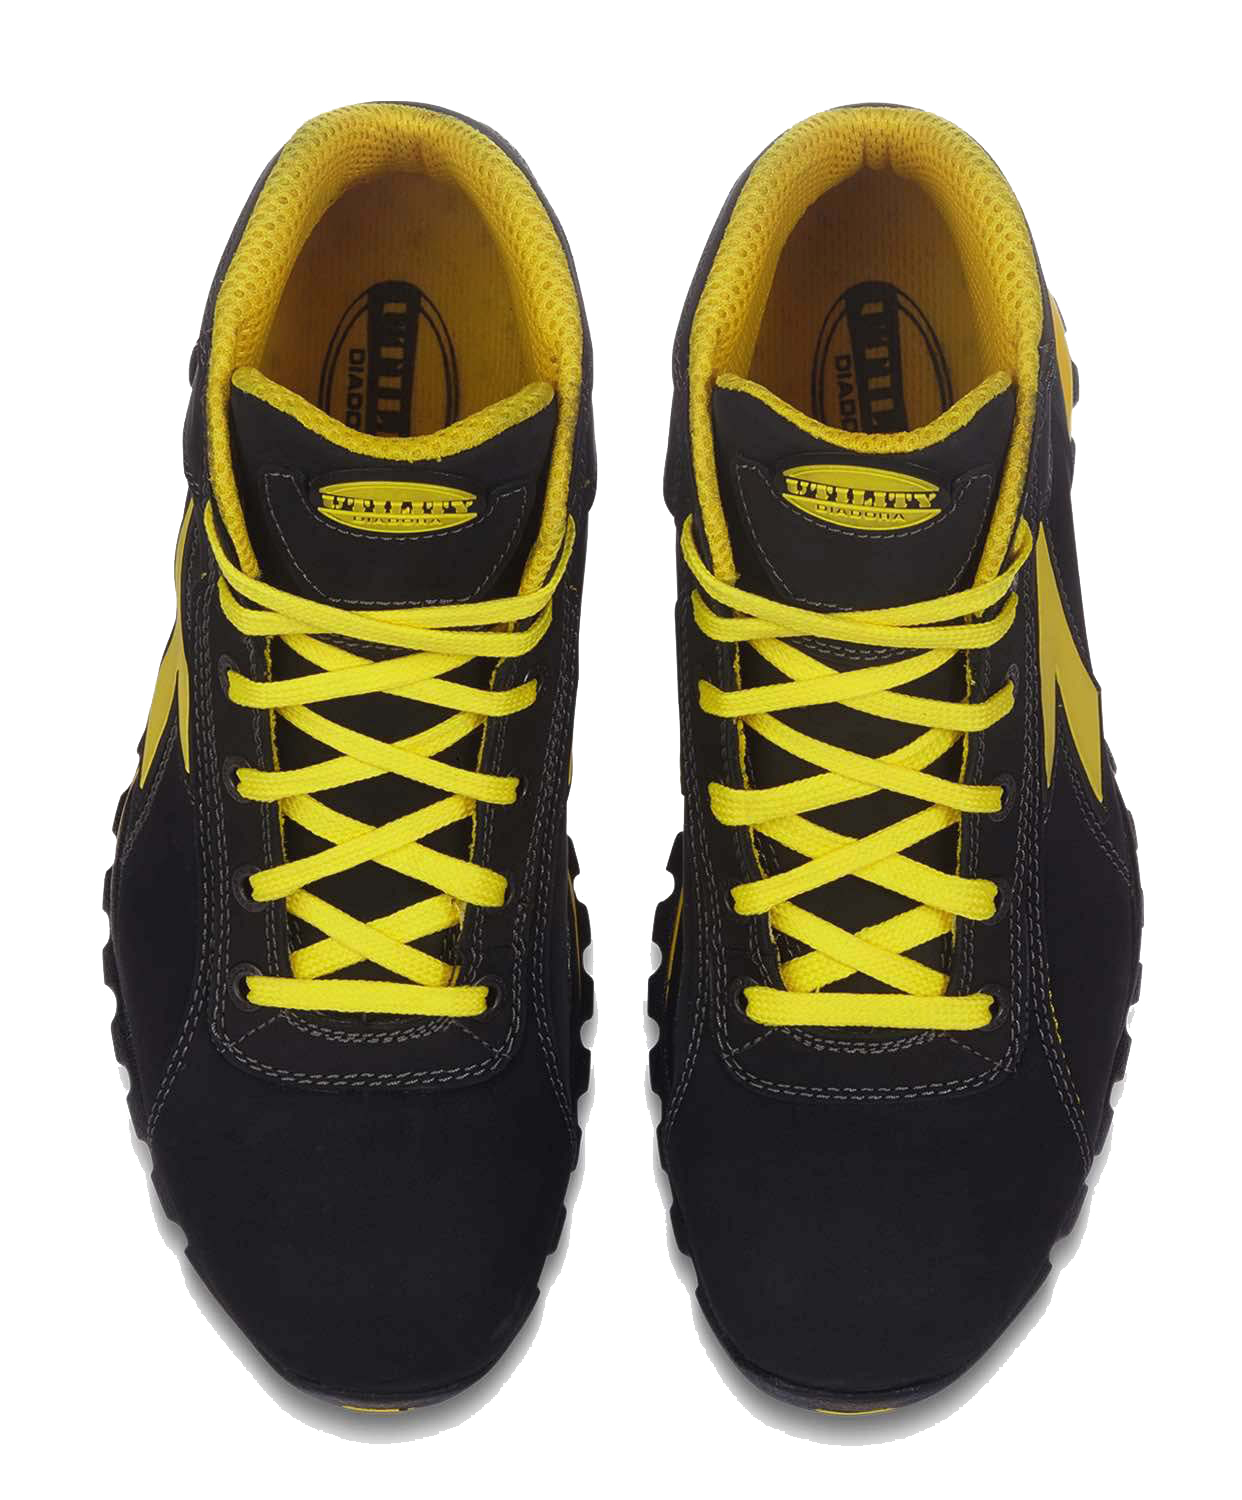 Chaussures de sécurité hautes GLOVE II HIGH S3 SRA HRO noir/jaune P40 - DIADORA SPA - 701.170234